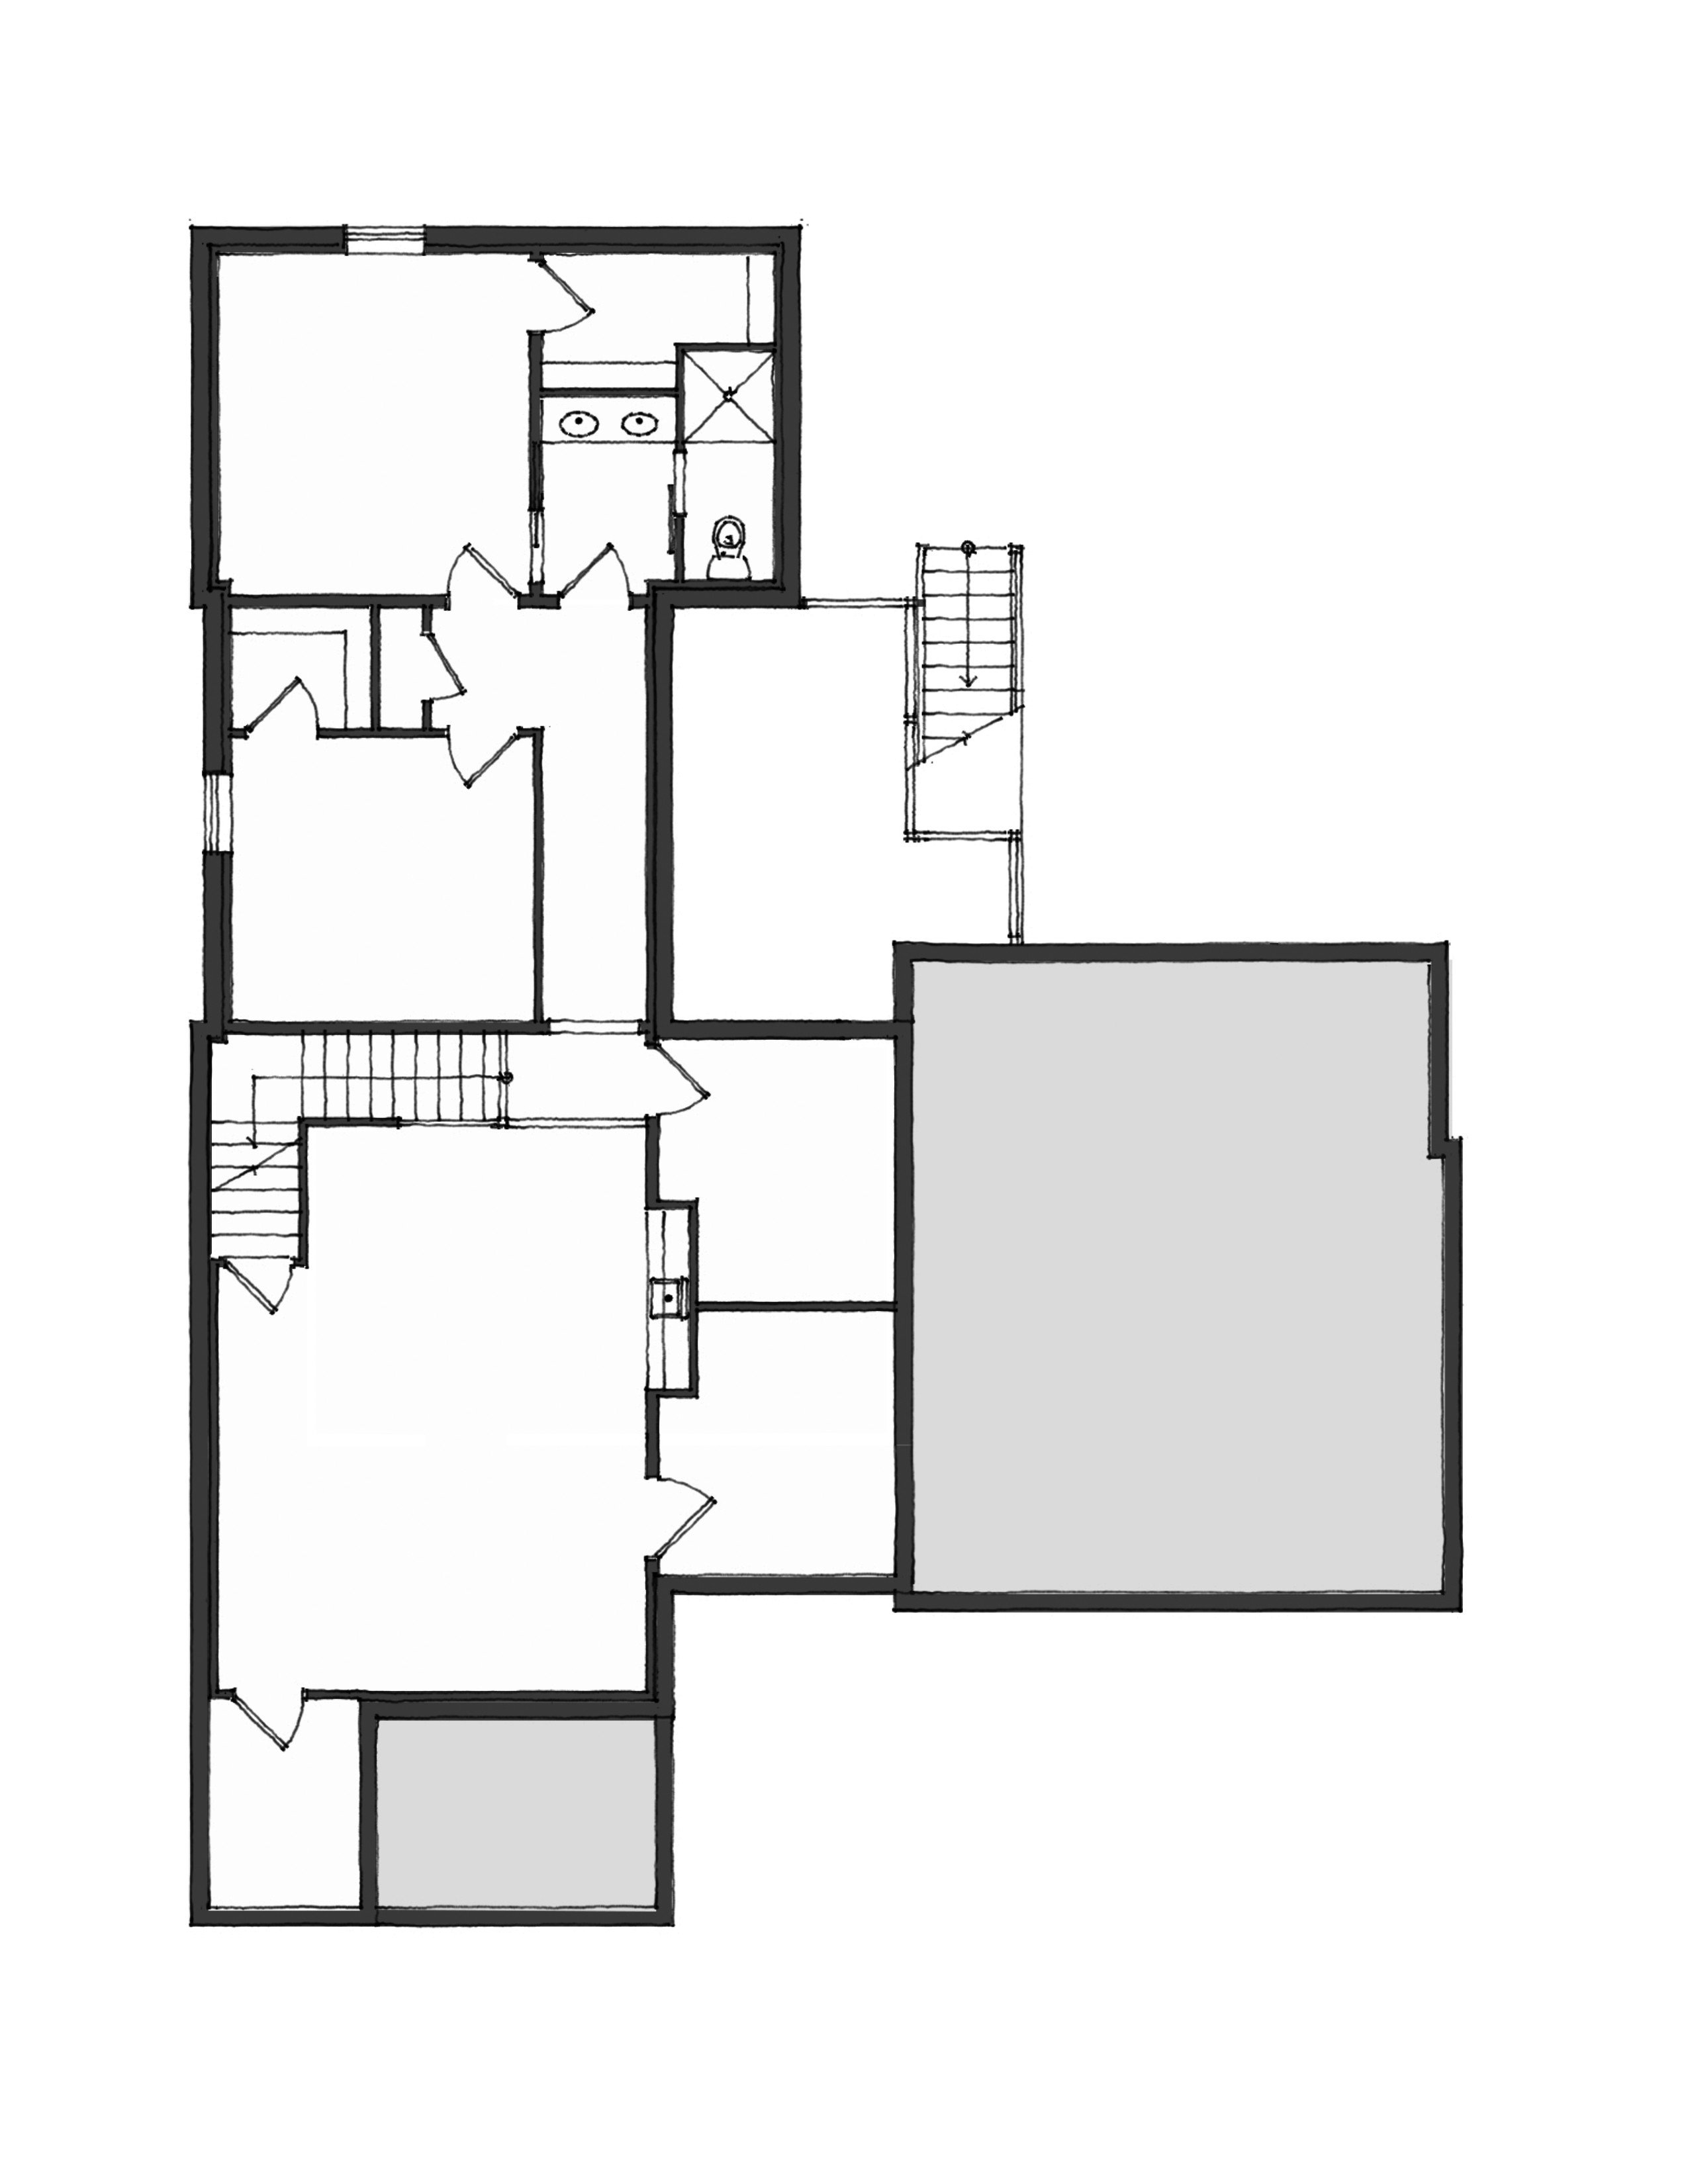 residential-warren-county-iowa-0-acres-listing-number-16131-Parkland Lot 1 P4 Basement Floor Plan-0.jpg